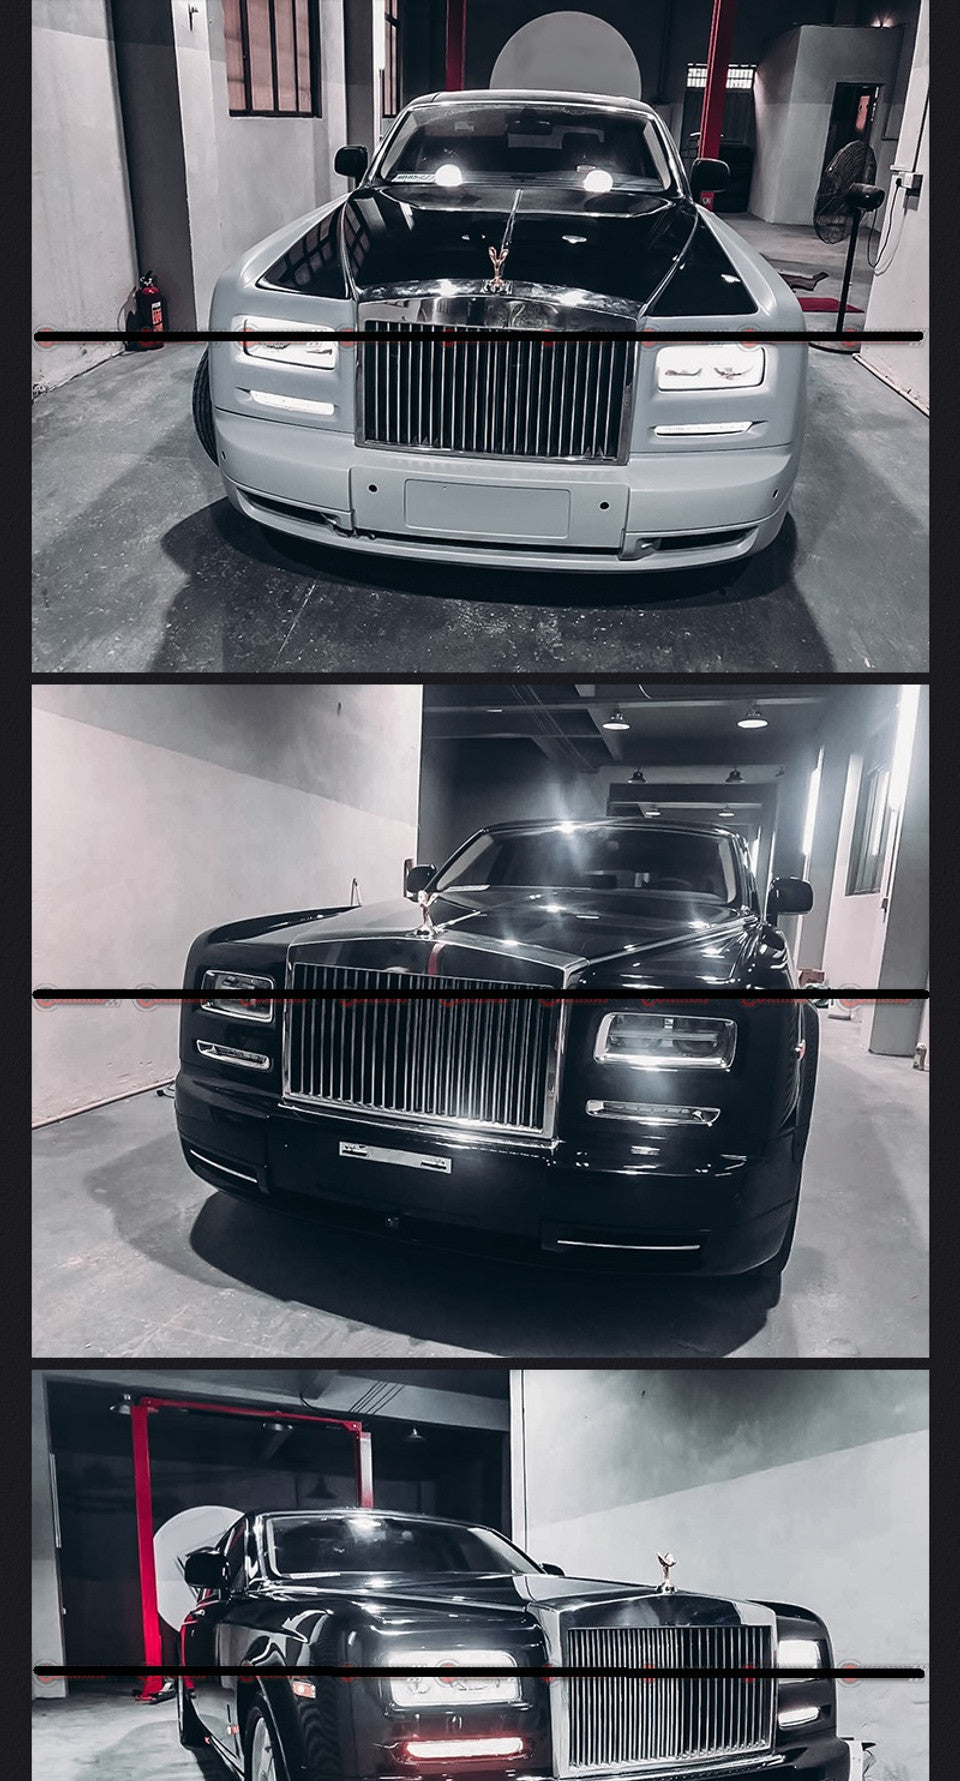 Rolls Royce Phantom 1 to Phantom 2 Conversion Body Kit